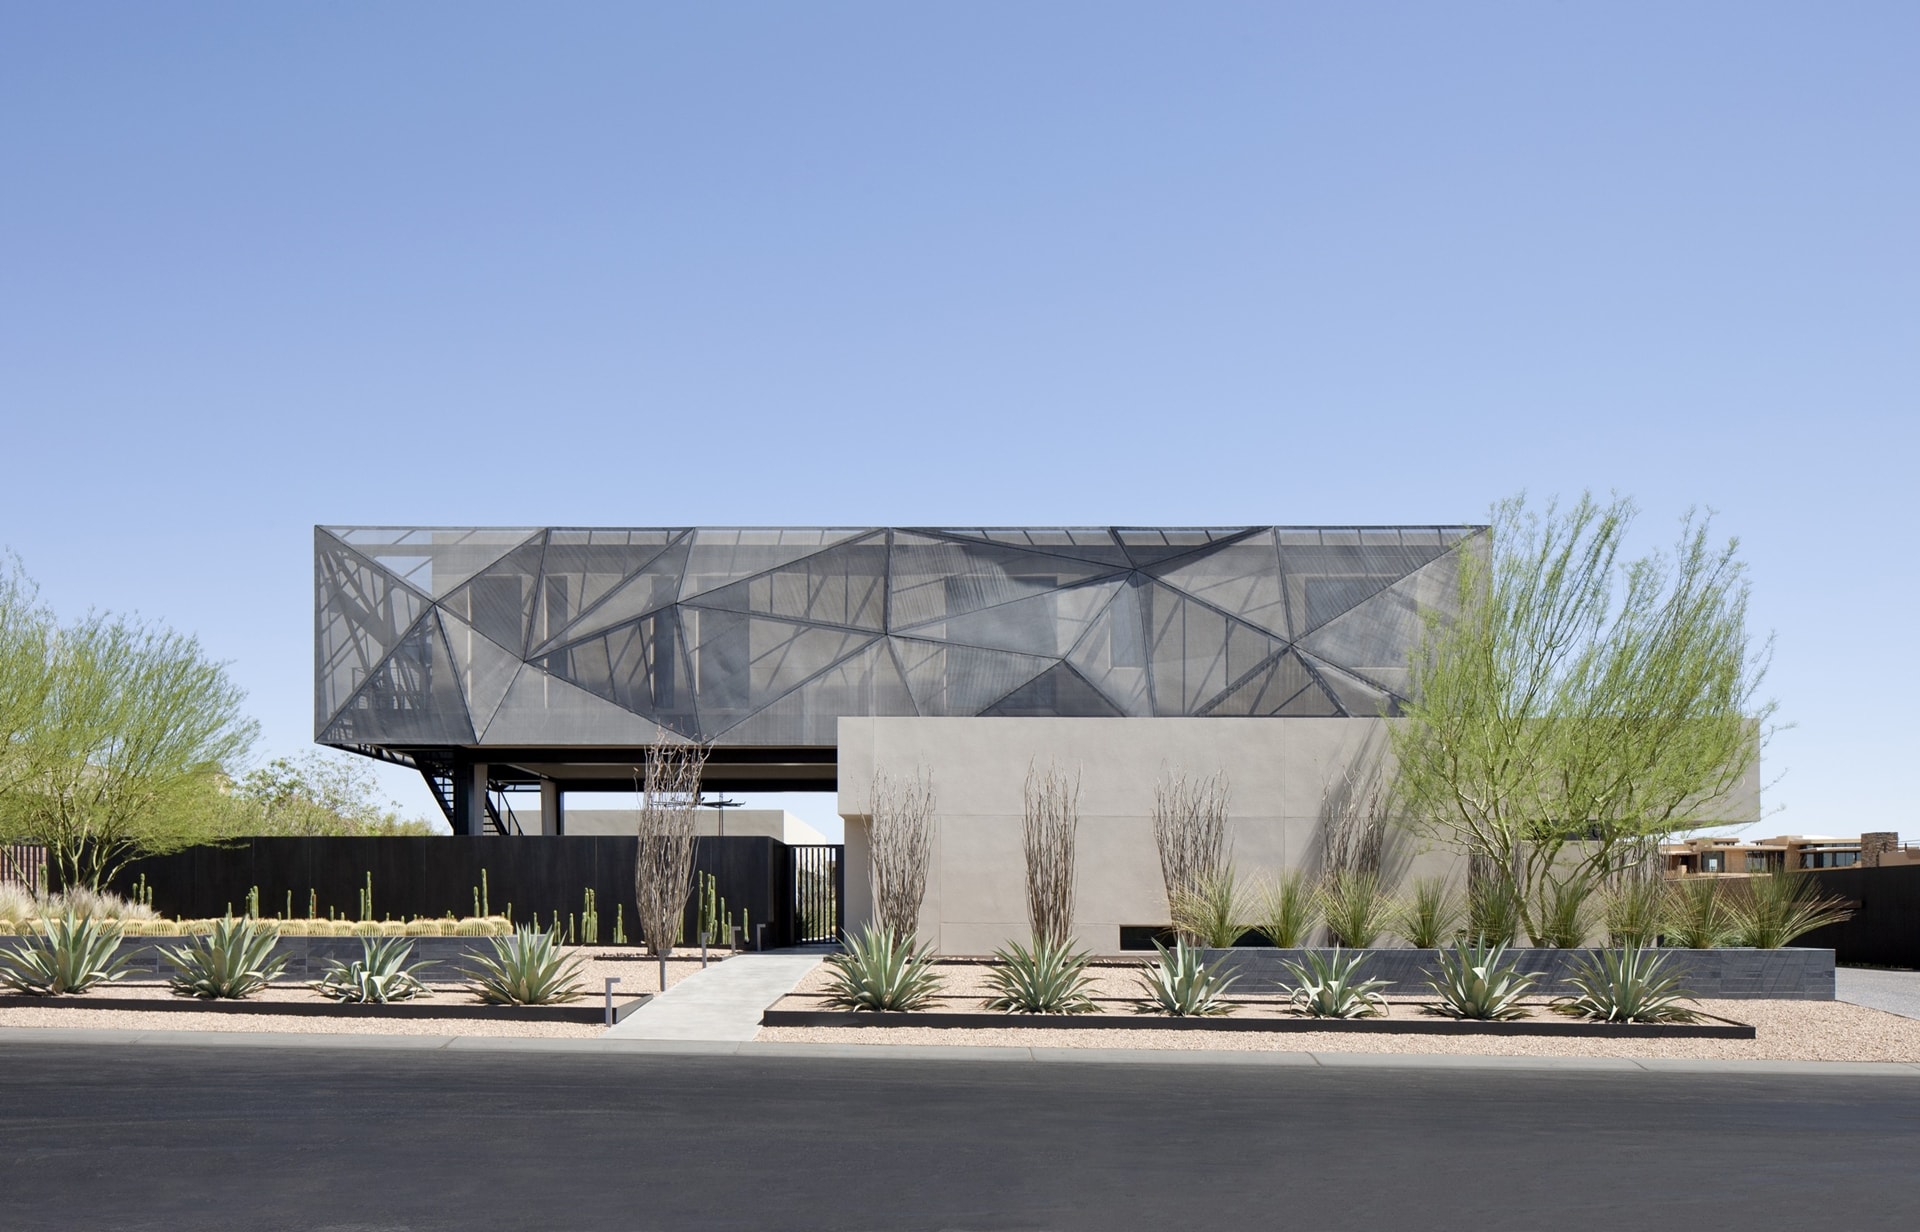 Street view of modern desert house designed by assemblageSTUDIO